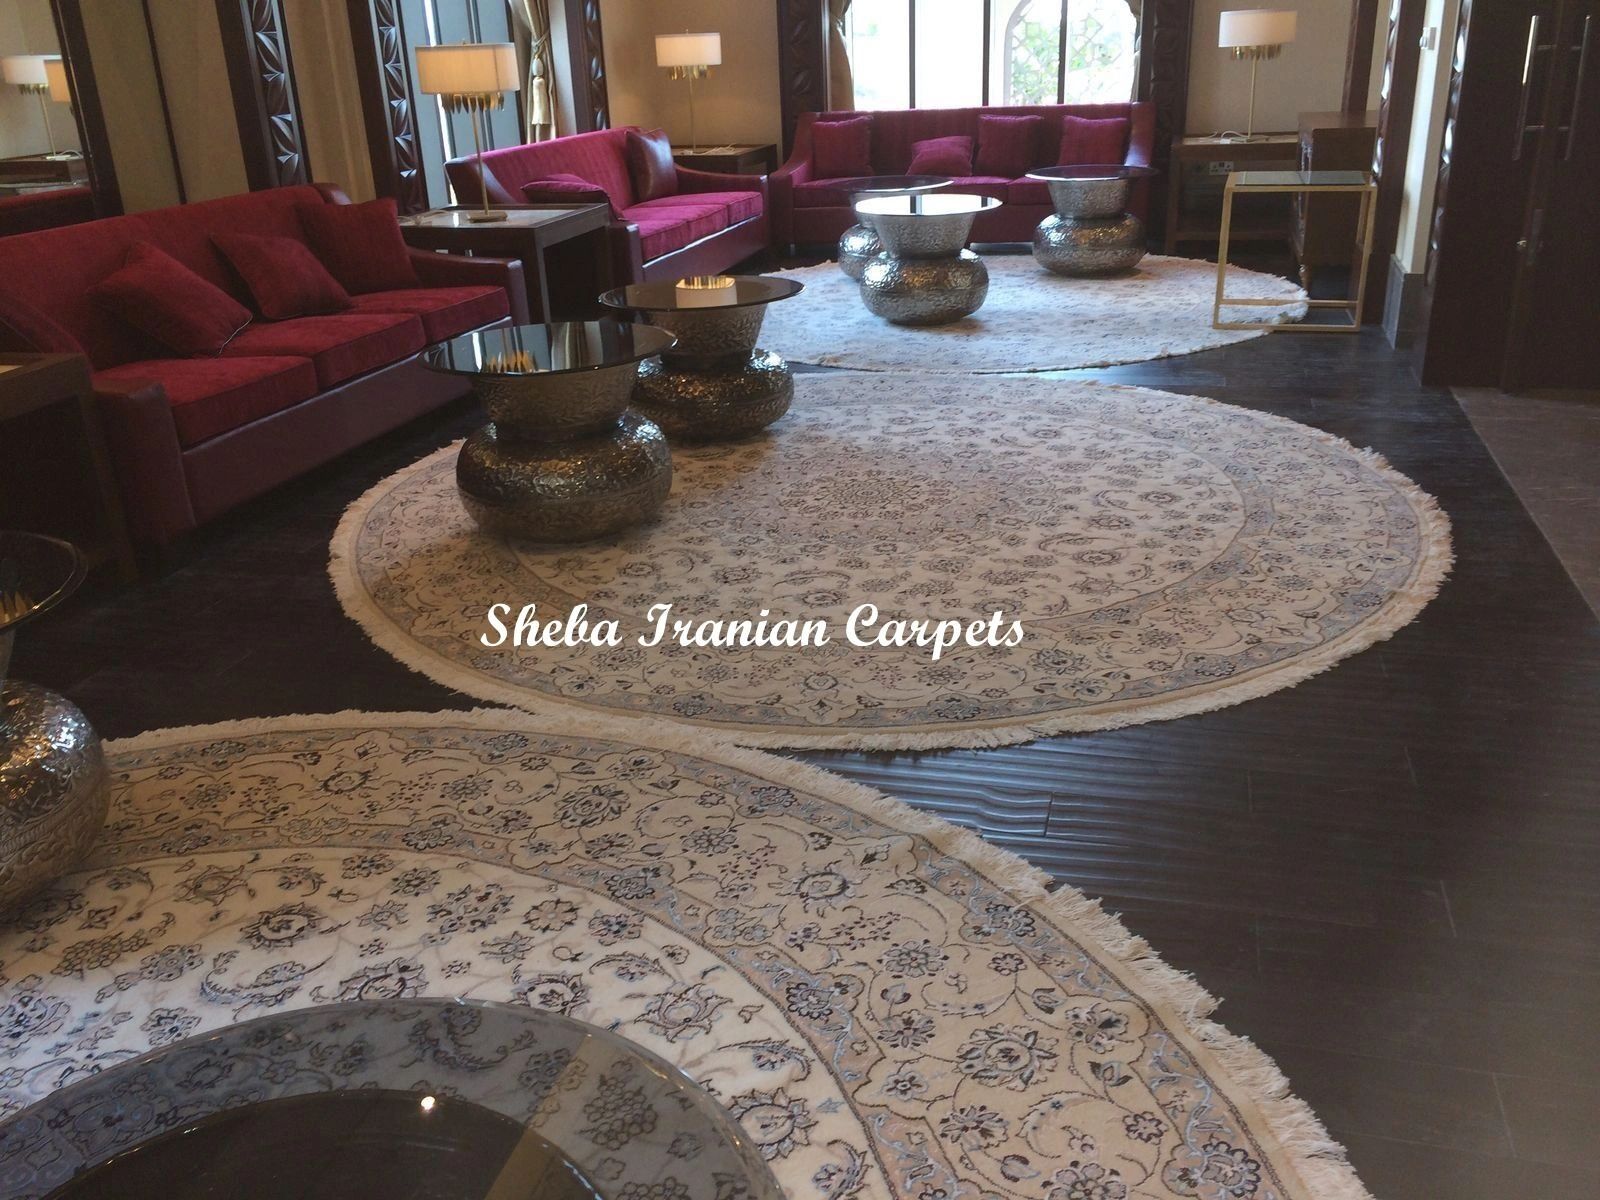 Round carpets collection at Sheba Iranian Carpets Stores.